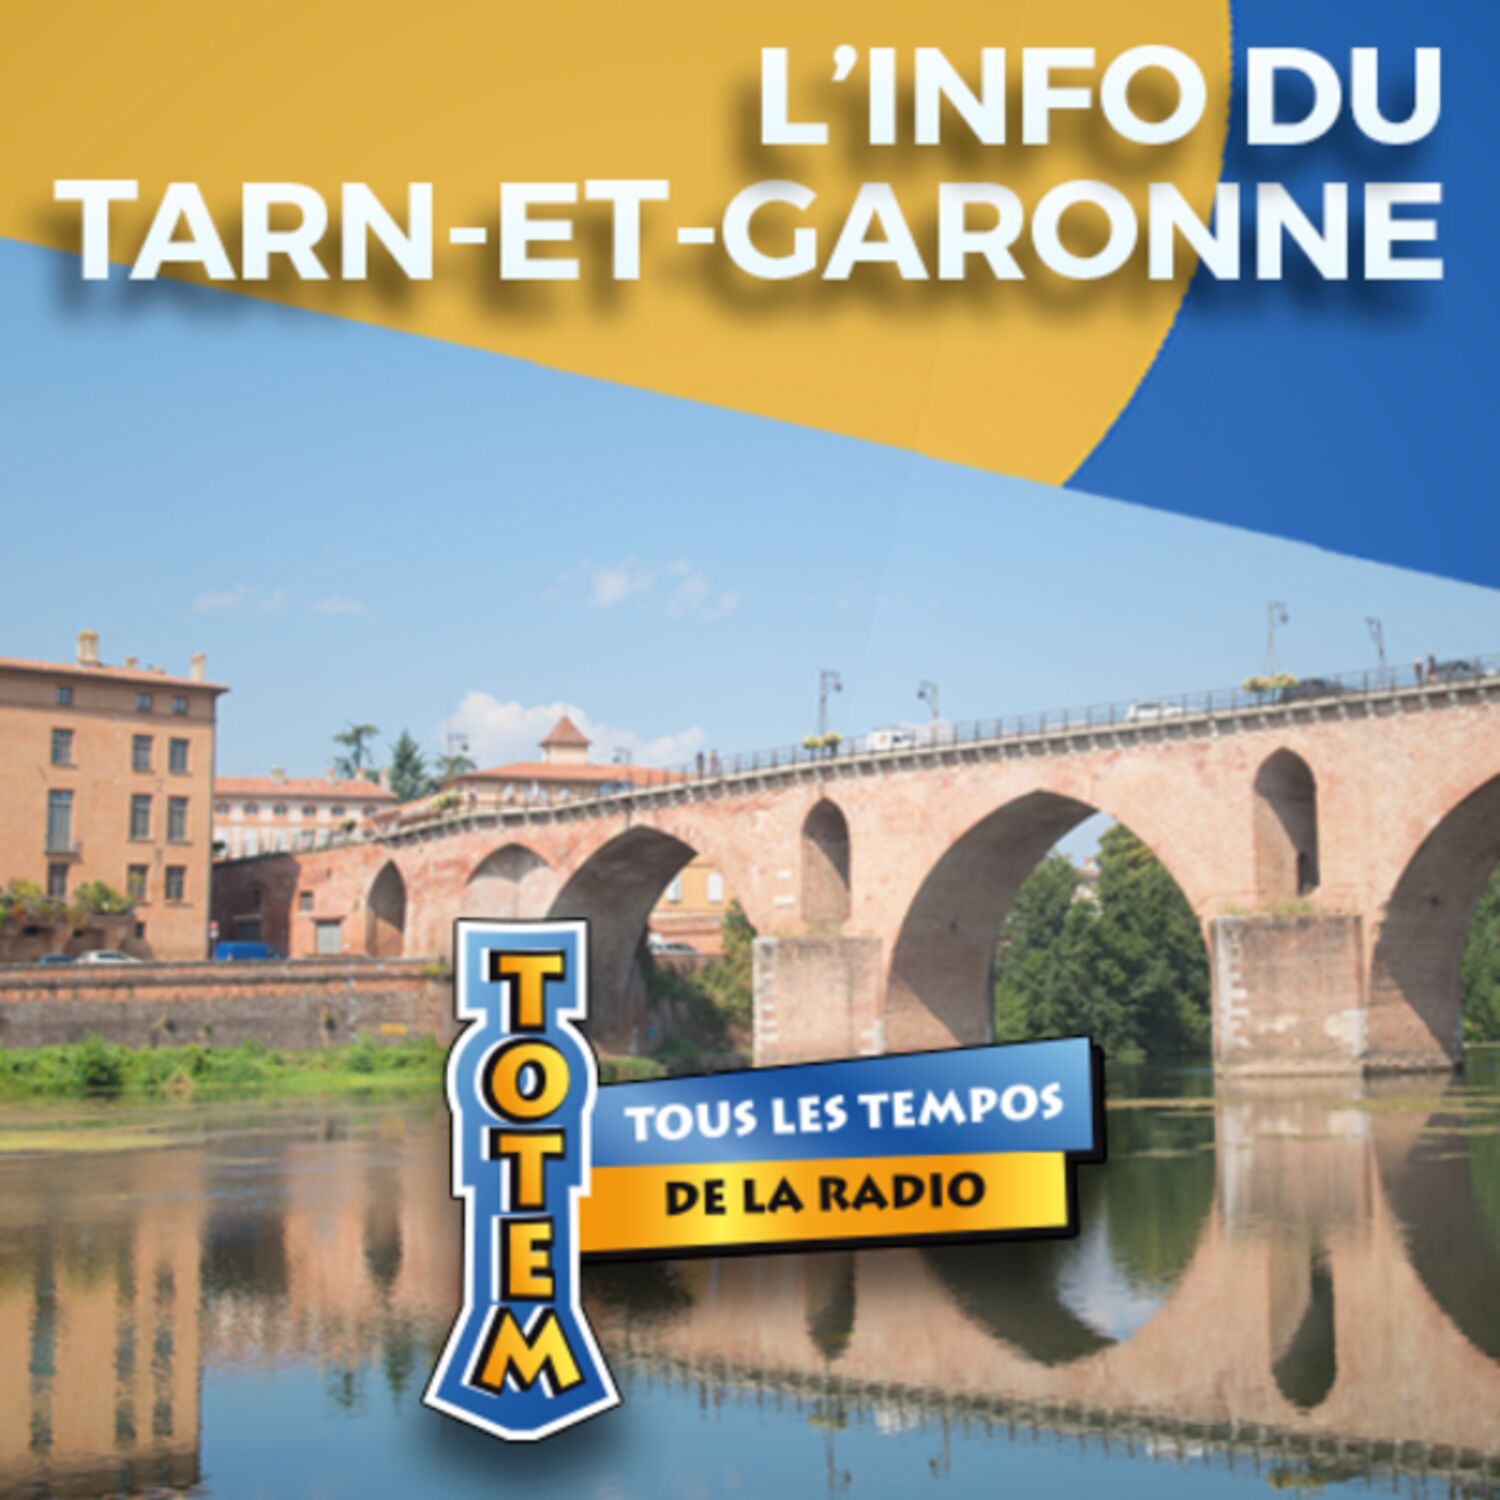 L'info du Tarn-et-Garonne du 04/05/23 à 19h00